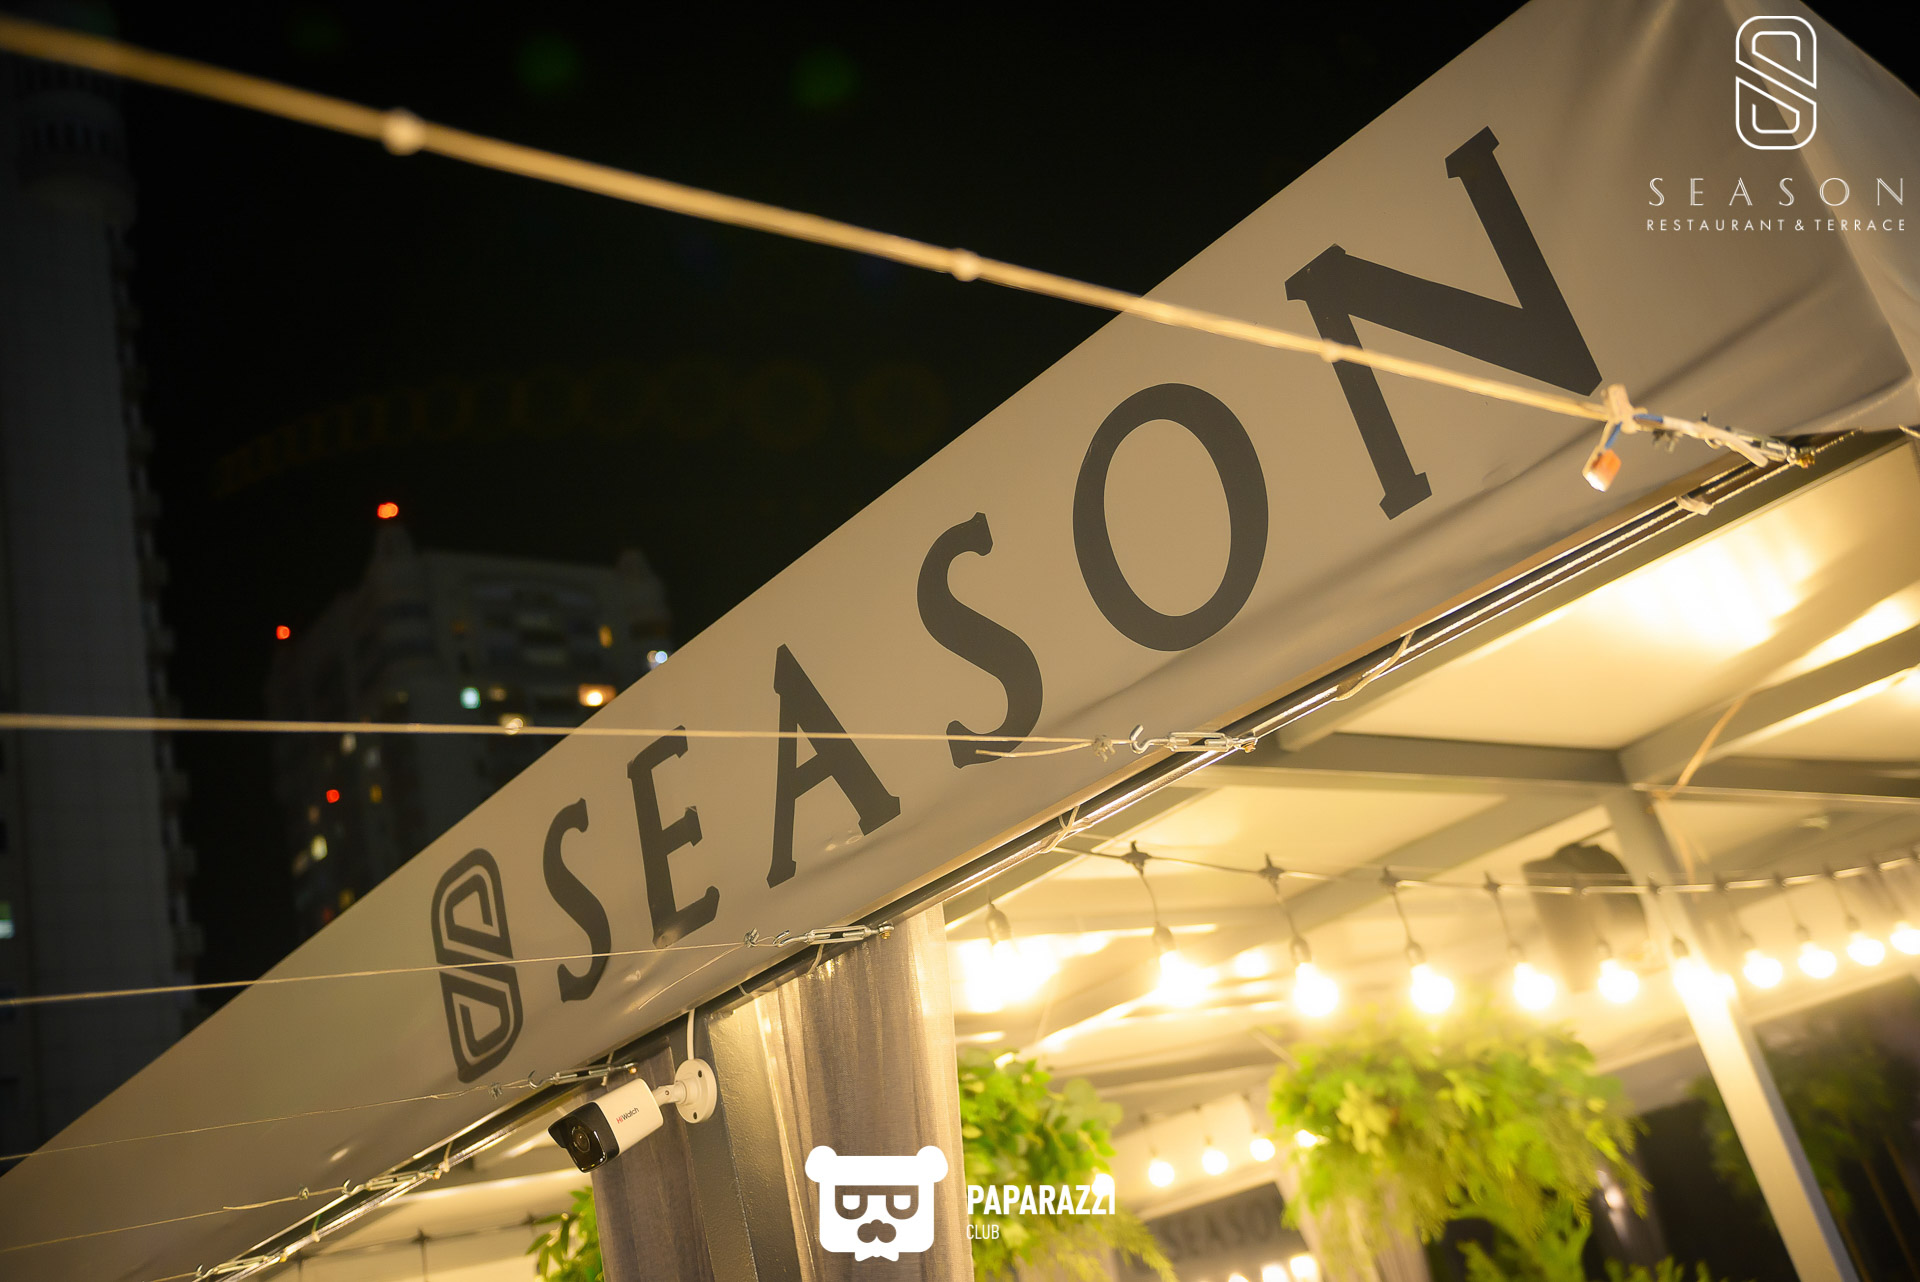 “Season Restaurant & Terrace”